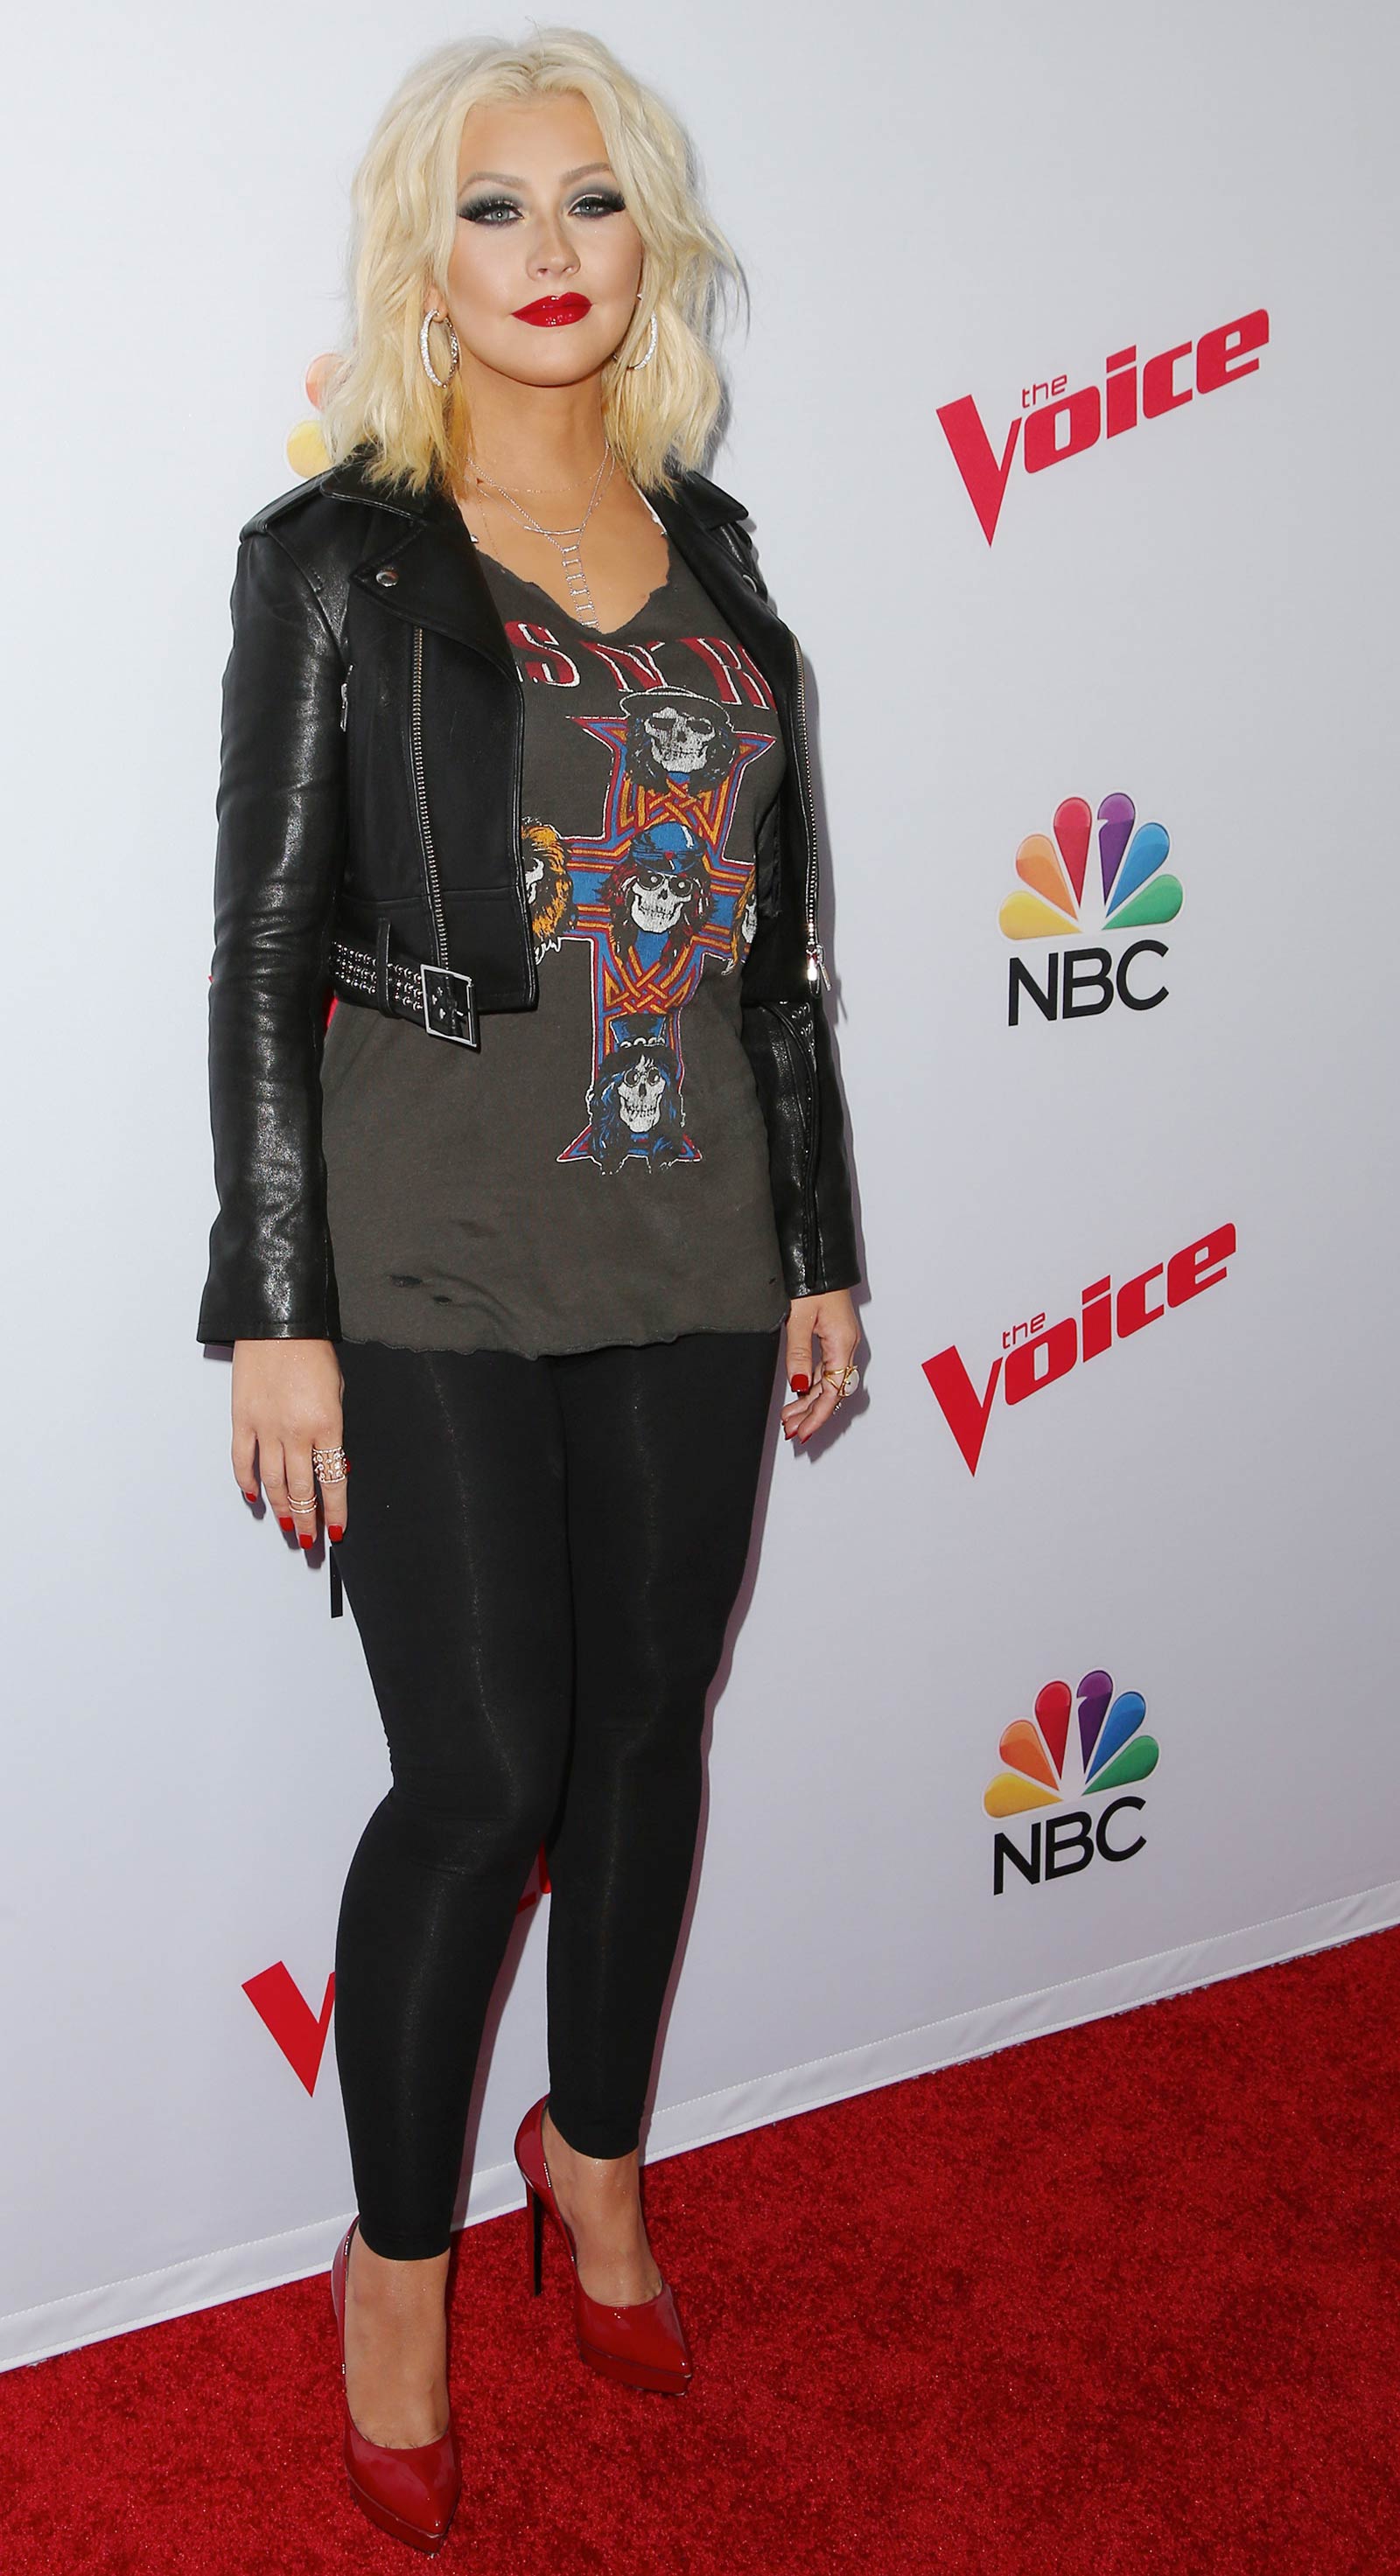 Christina Aguilera attends NBC The Voice Season 8 red carpet event